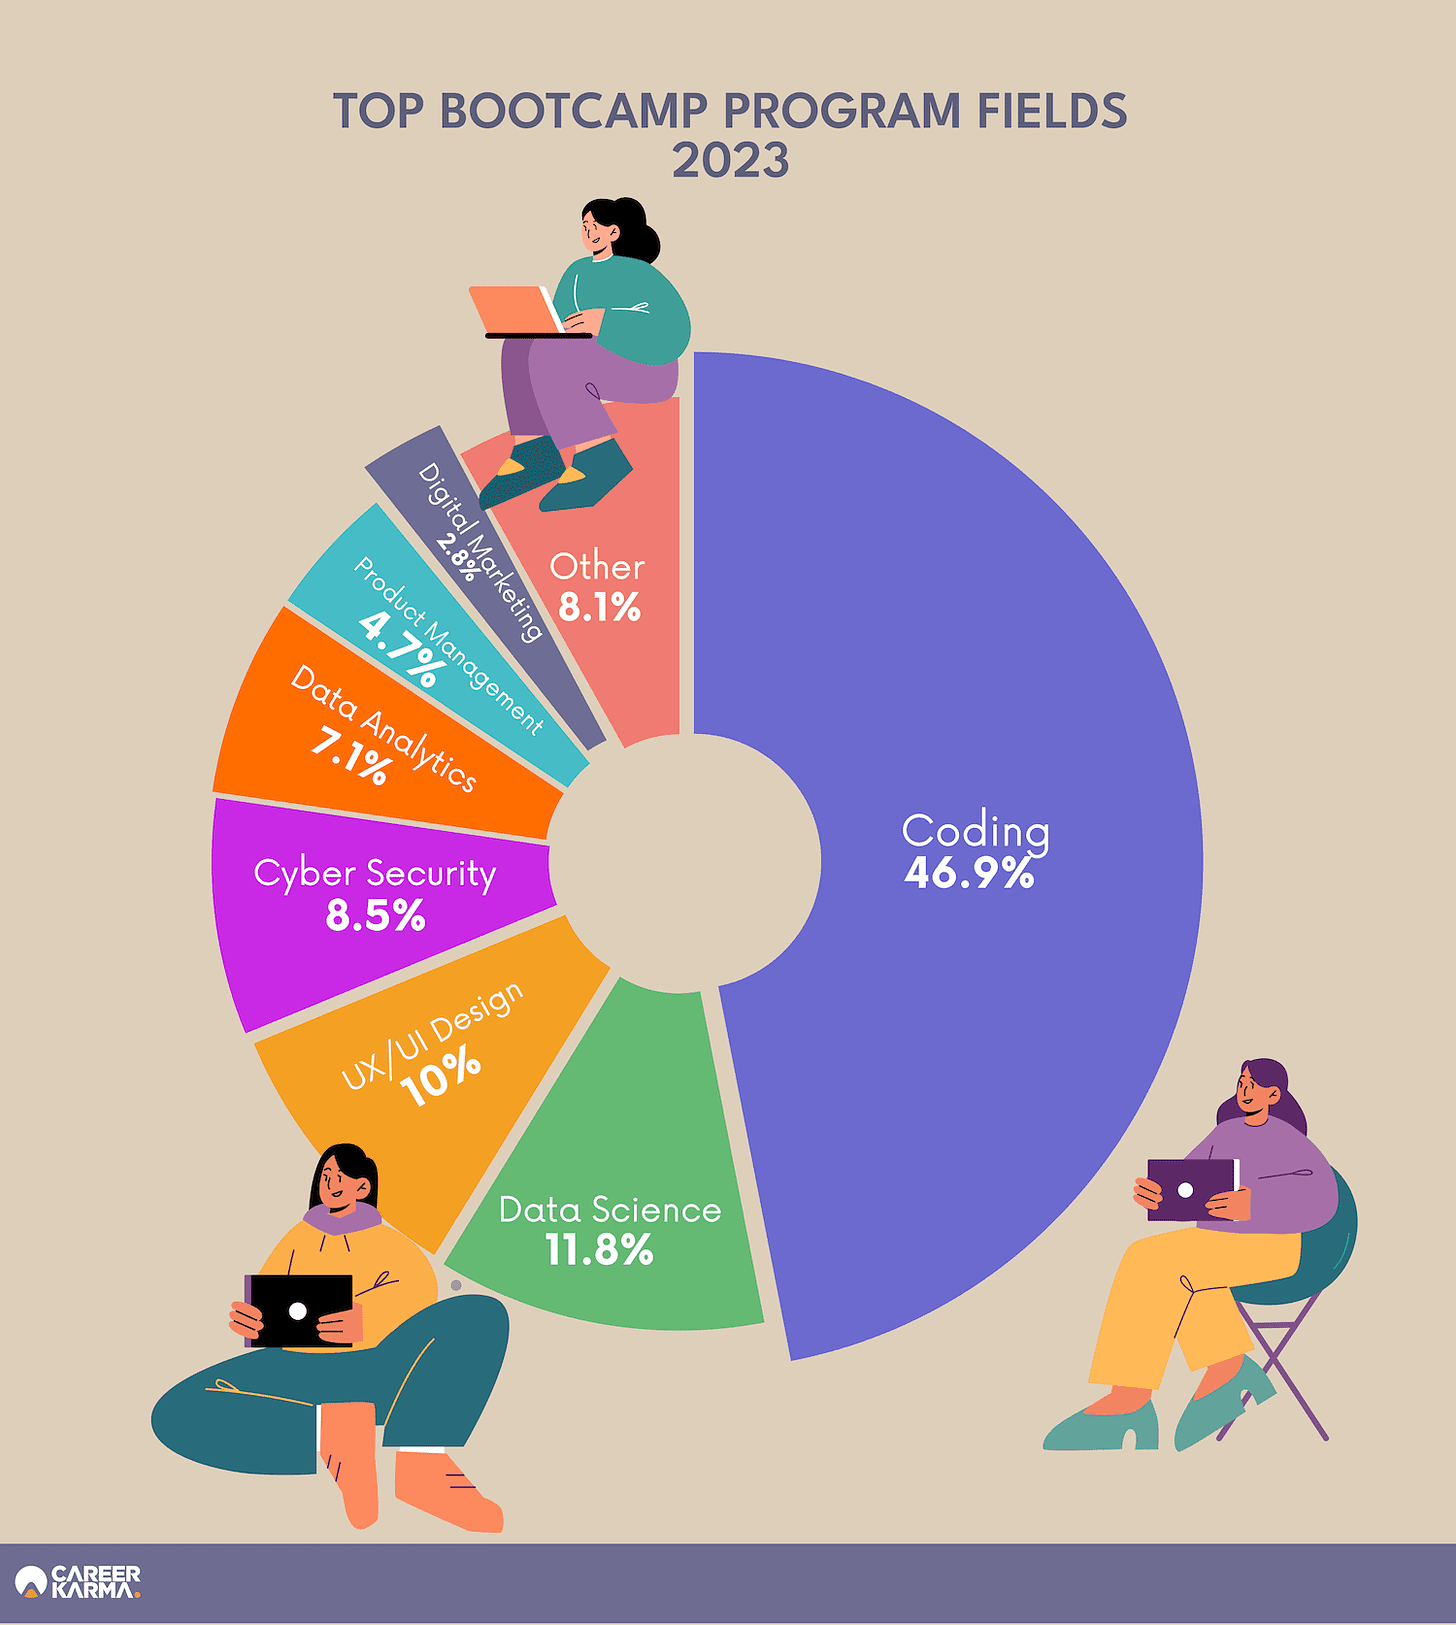 Top bootcamp program fields infographic